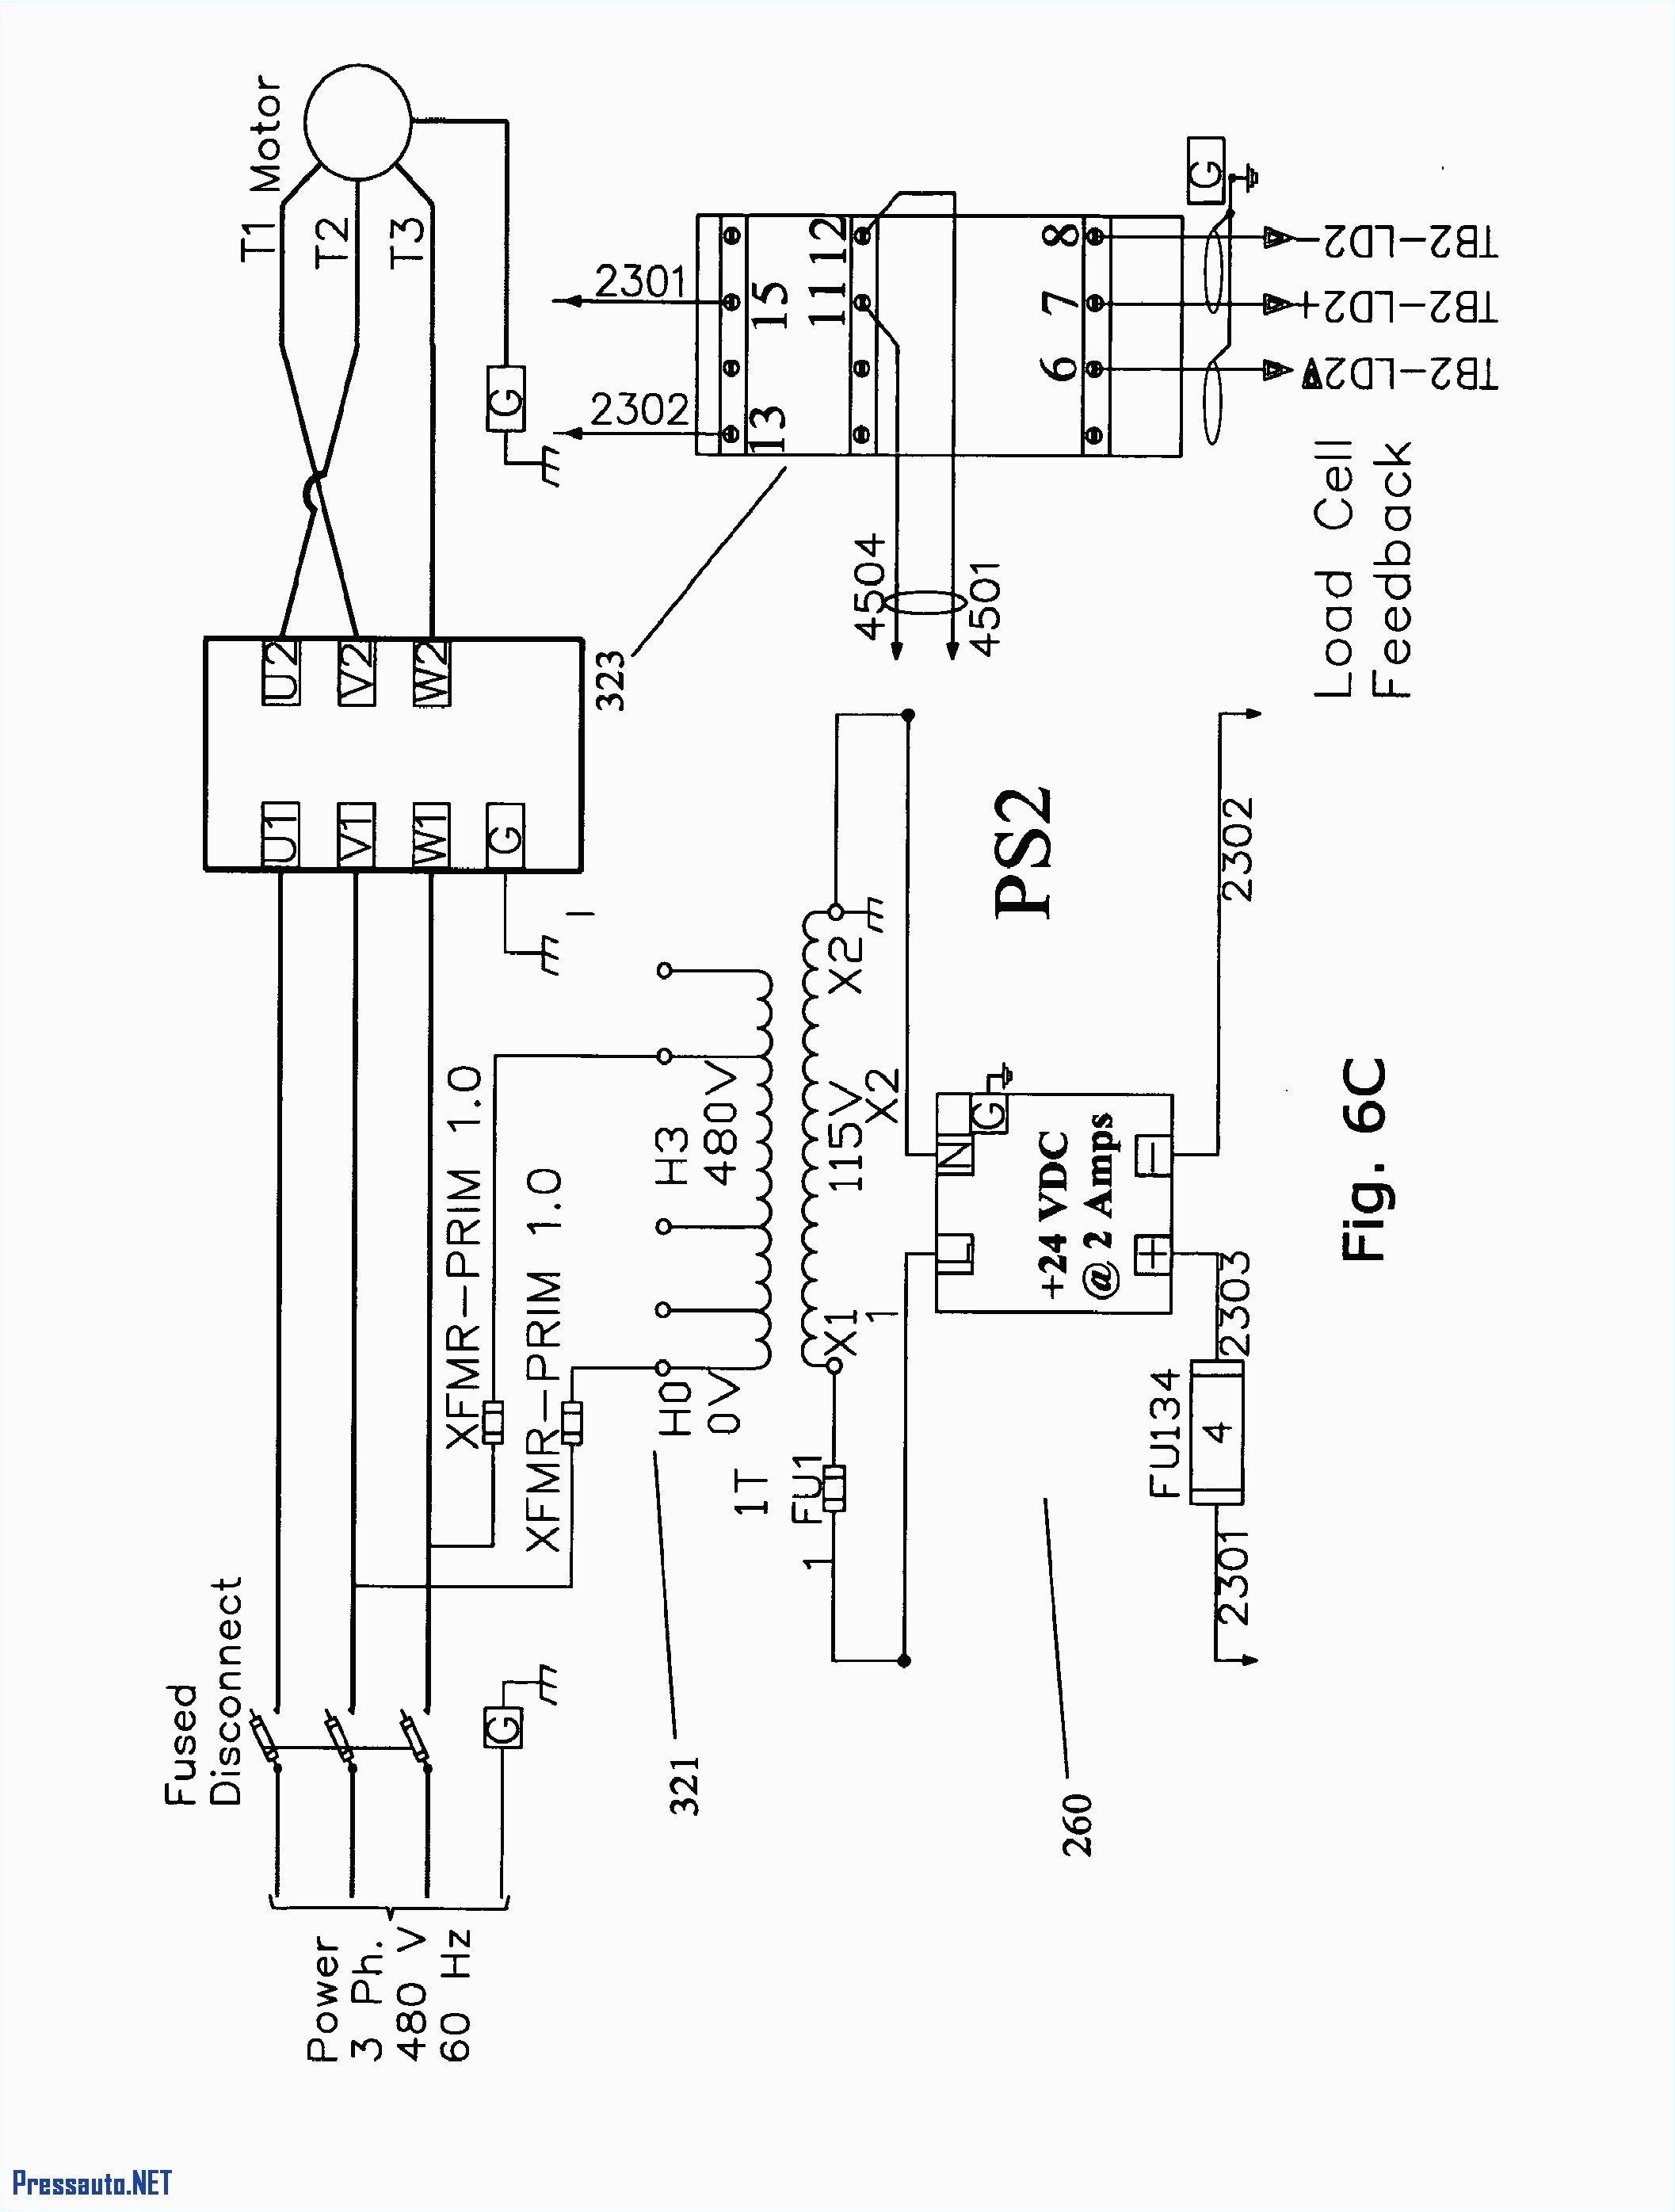 abb switch wiring diagram manual e book abb motors wiring diagrams abb sensor wiring diagram wiring